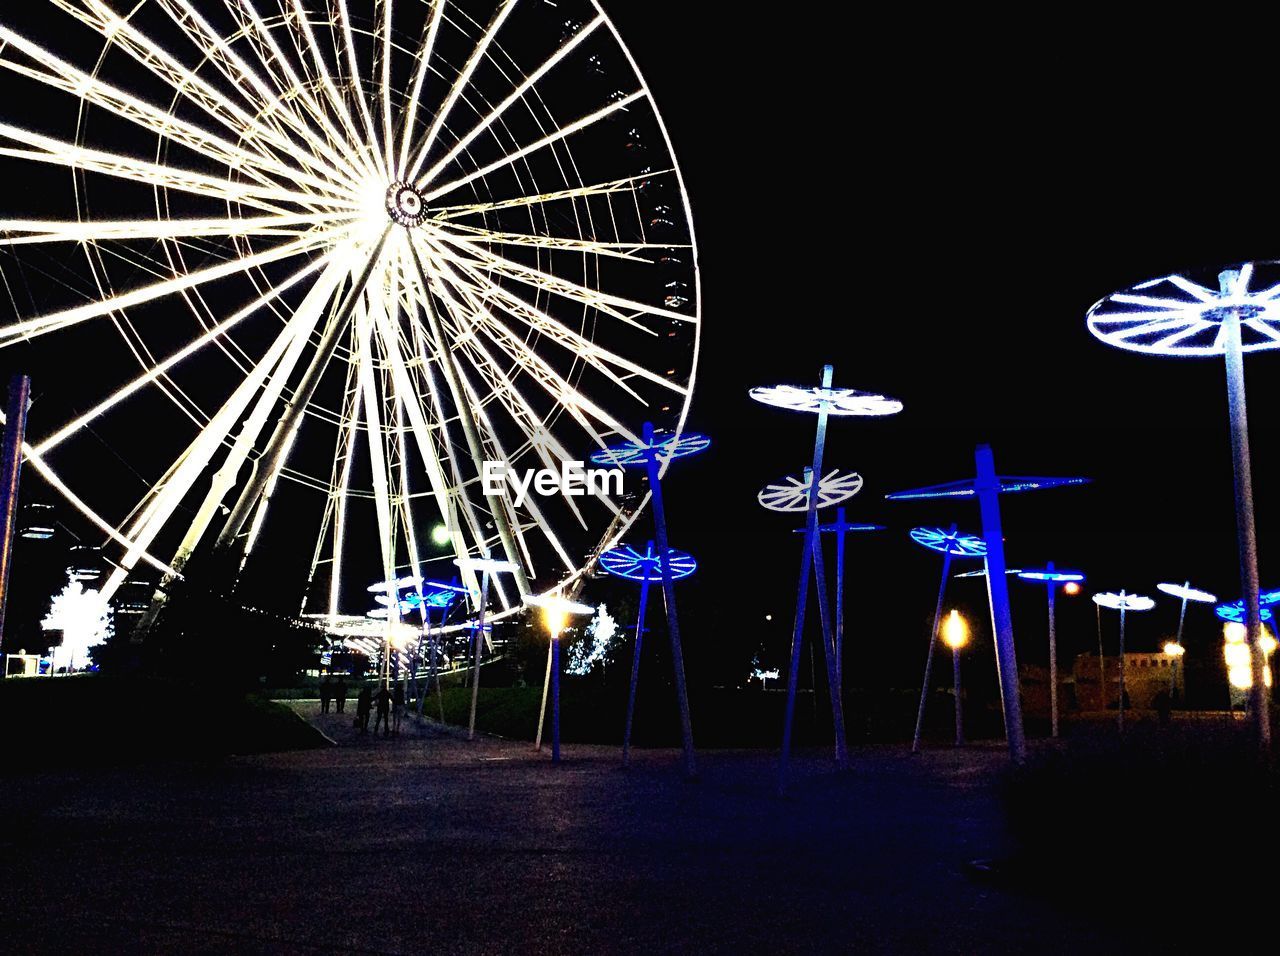 Illuminated ferris wheel in amusement park against clear sky at night